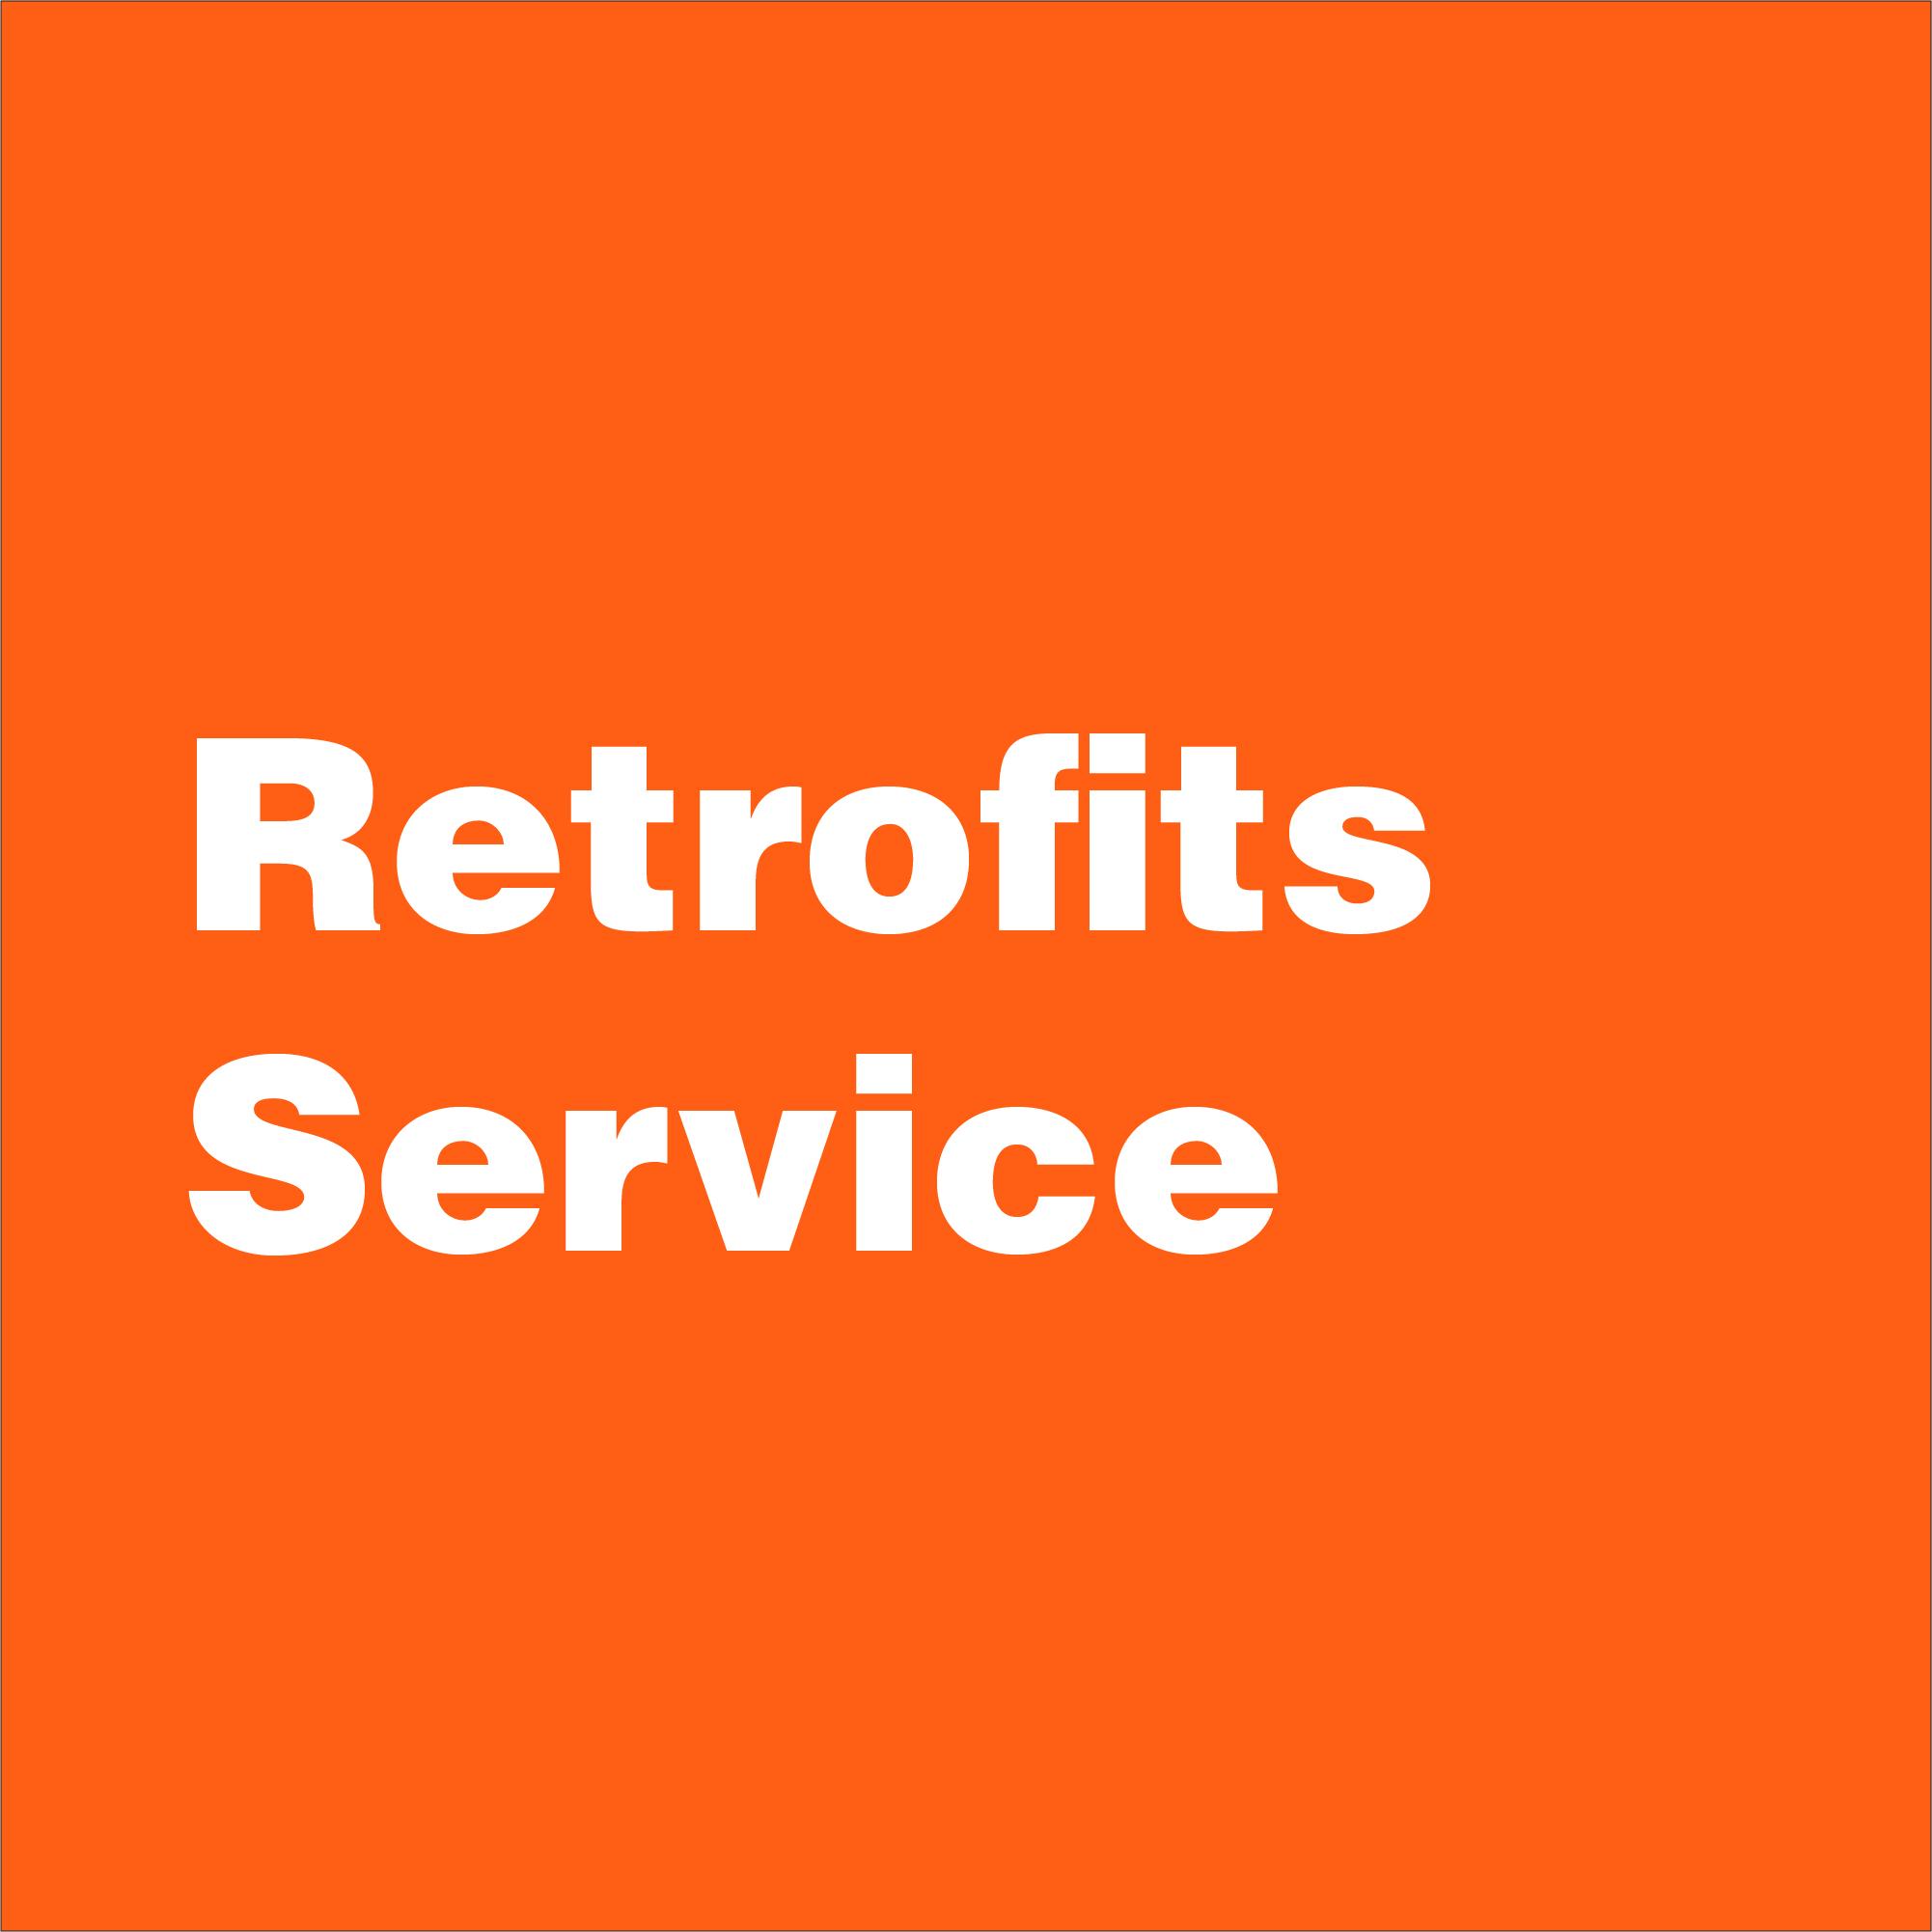 Retrofits2 image